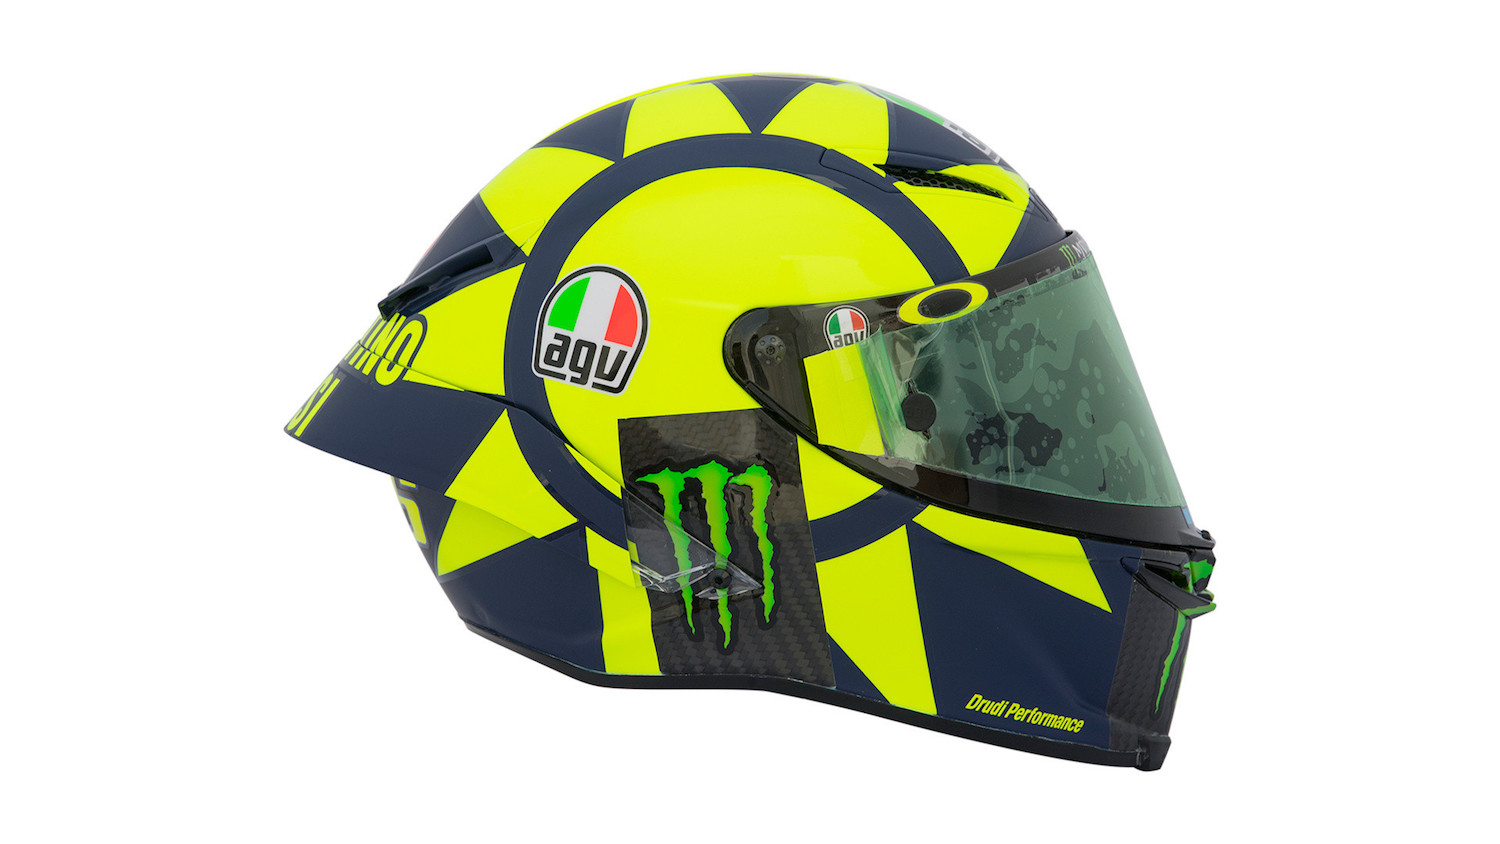 Rossi - new lid for Qatar 2018